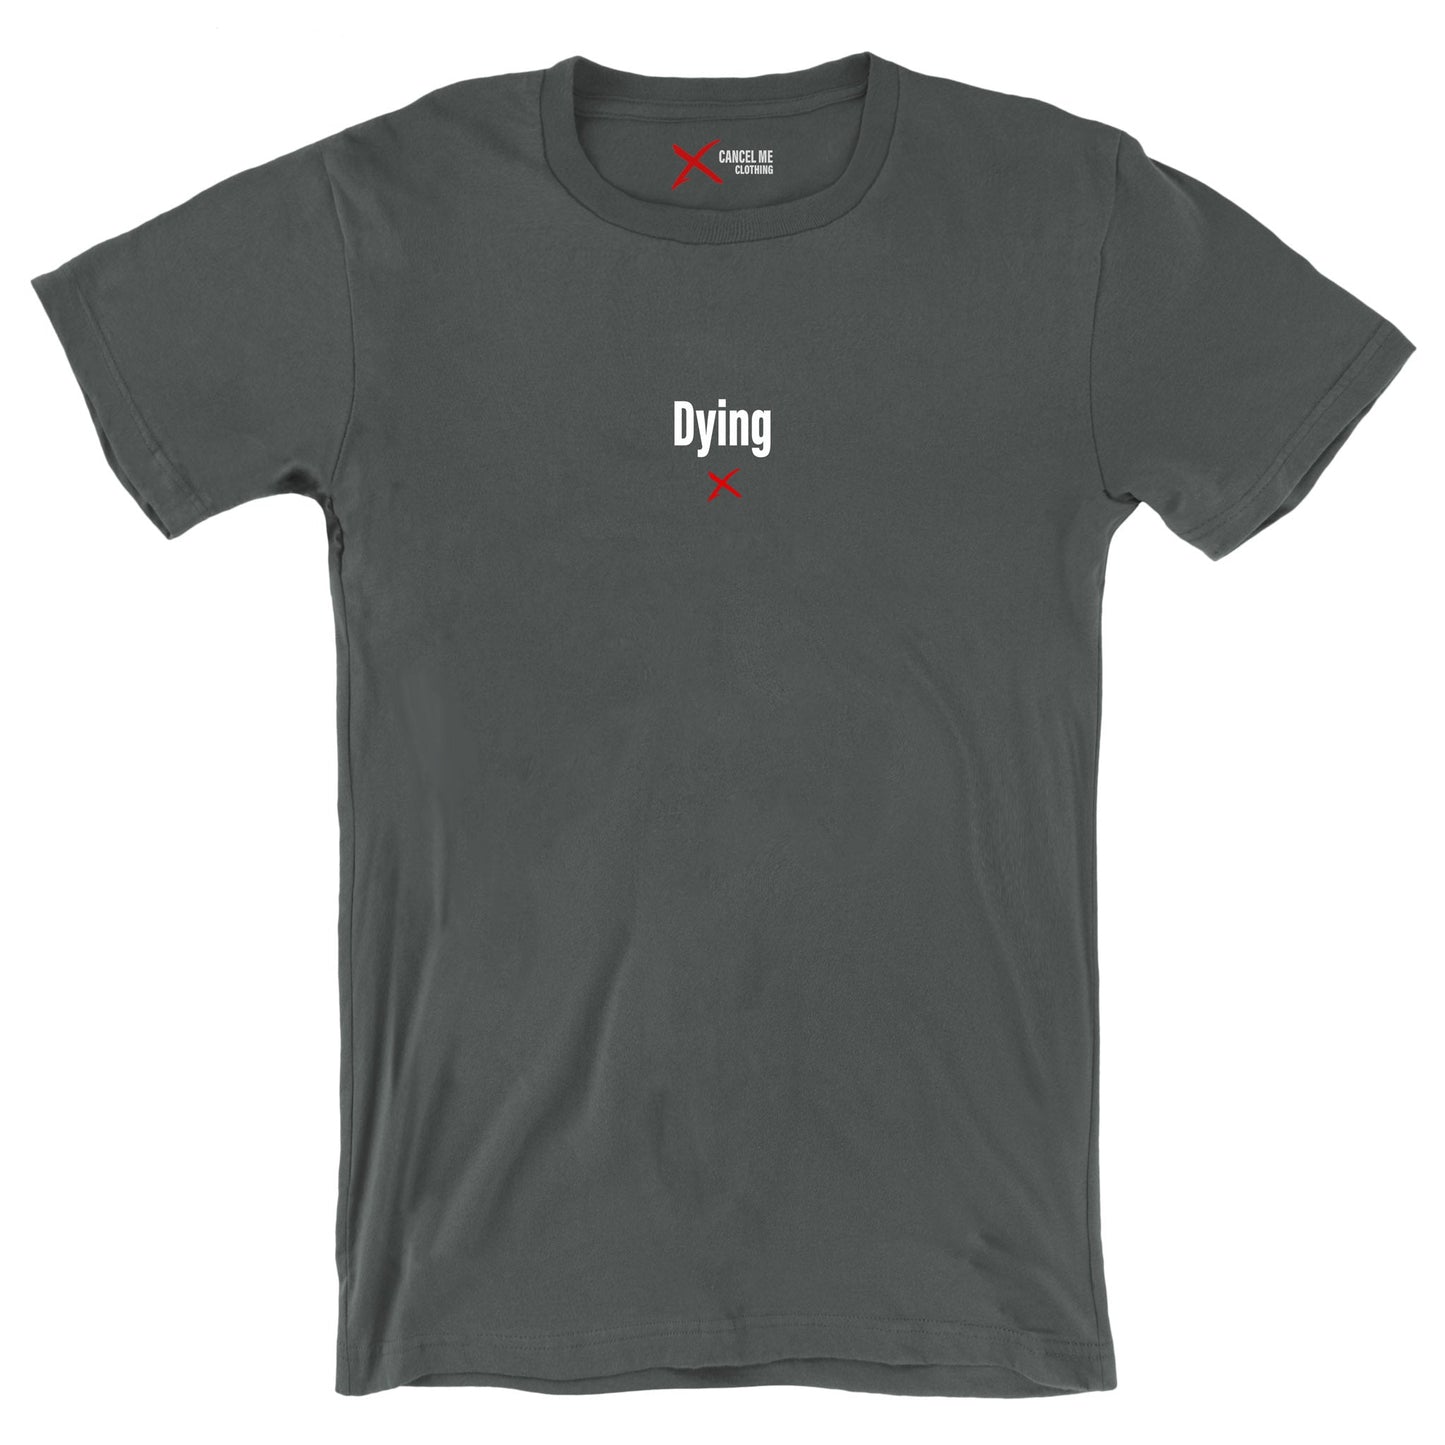 Dying - Shirt